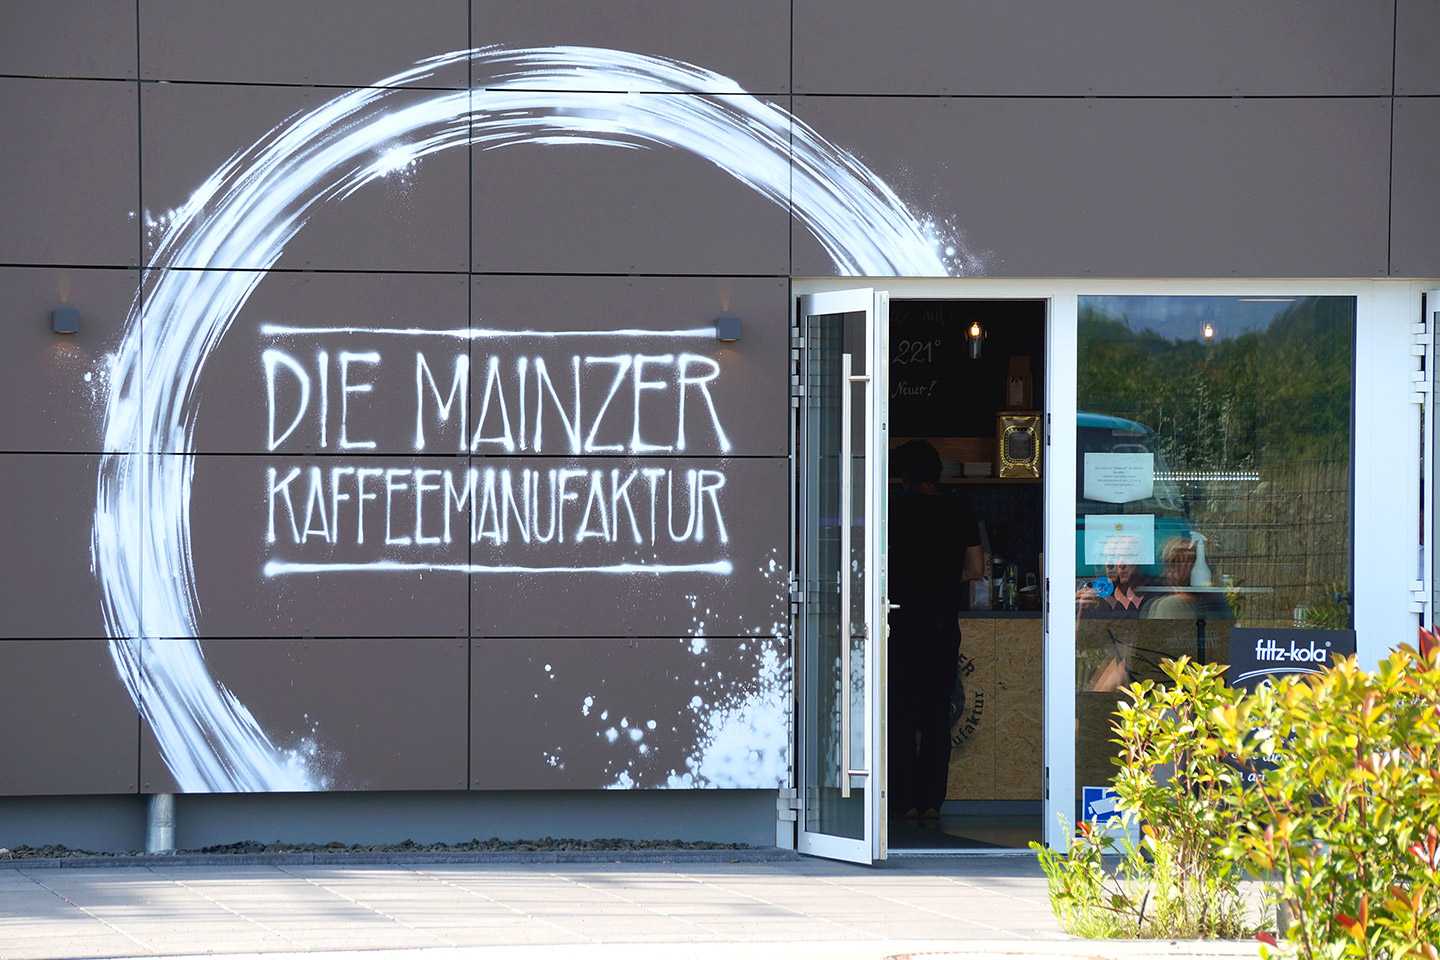 Exterior facade of the Mainzer Kaffeemanufaktur